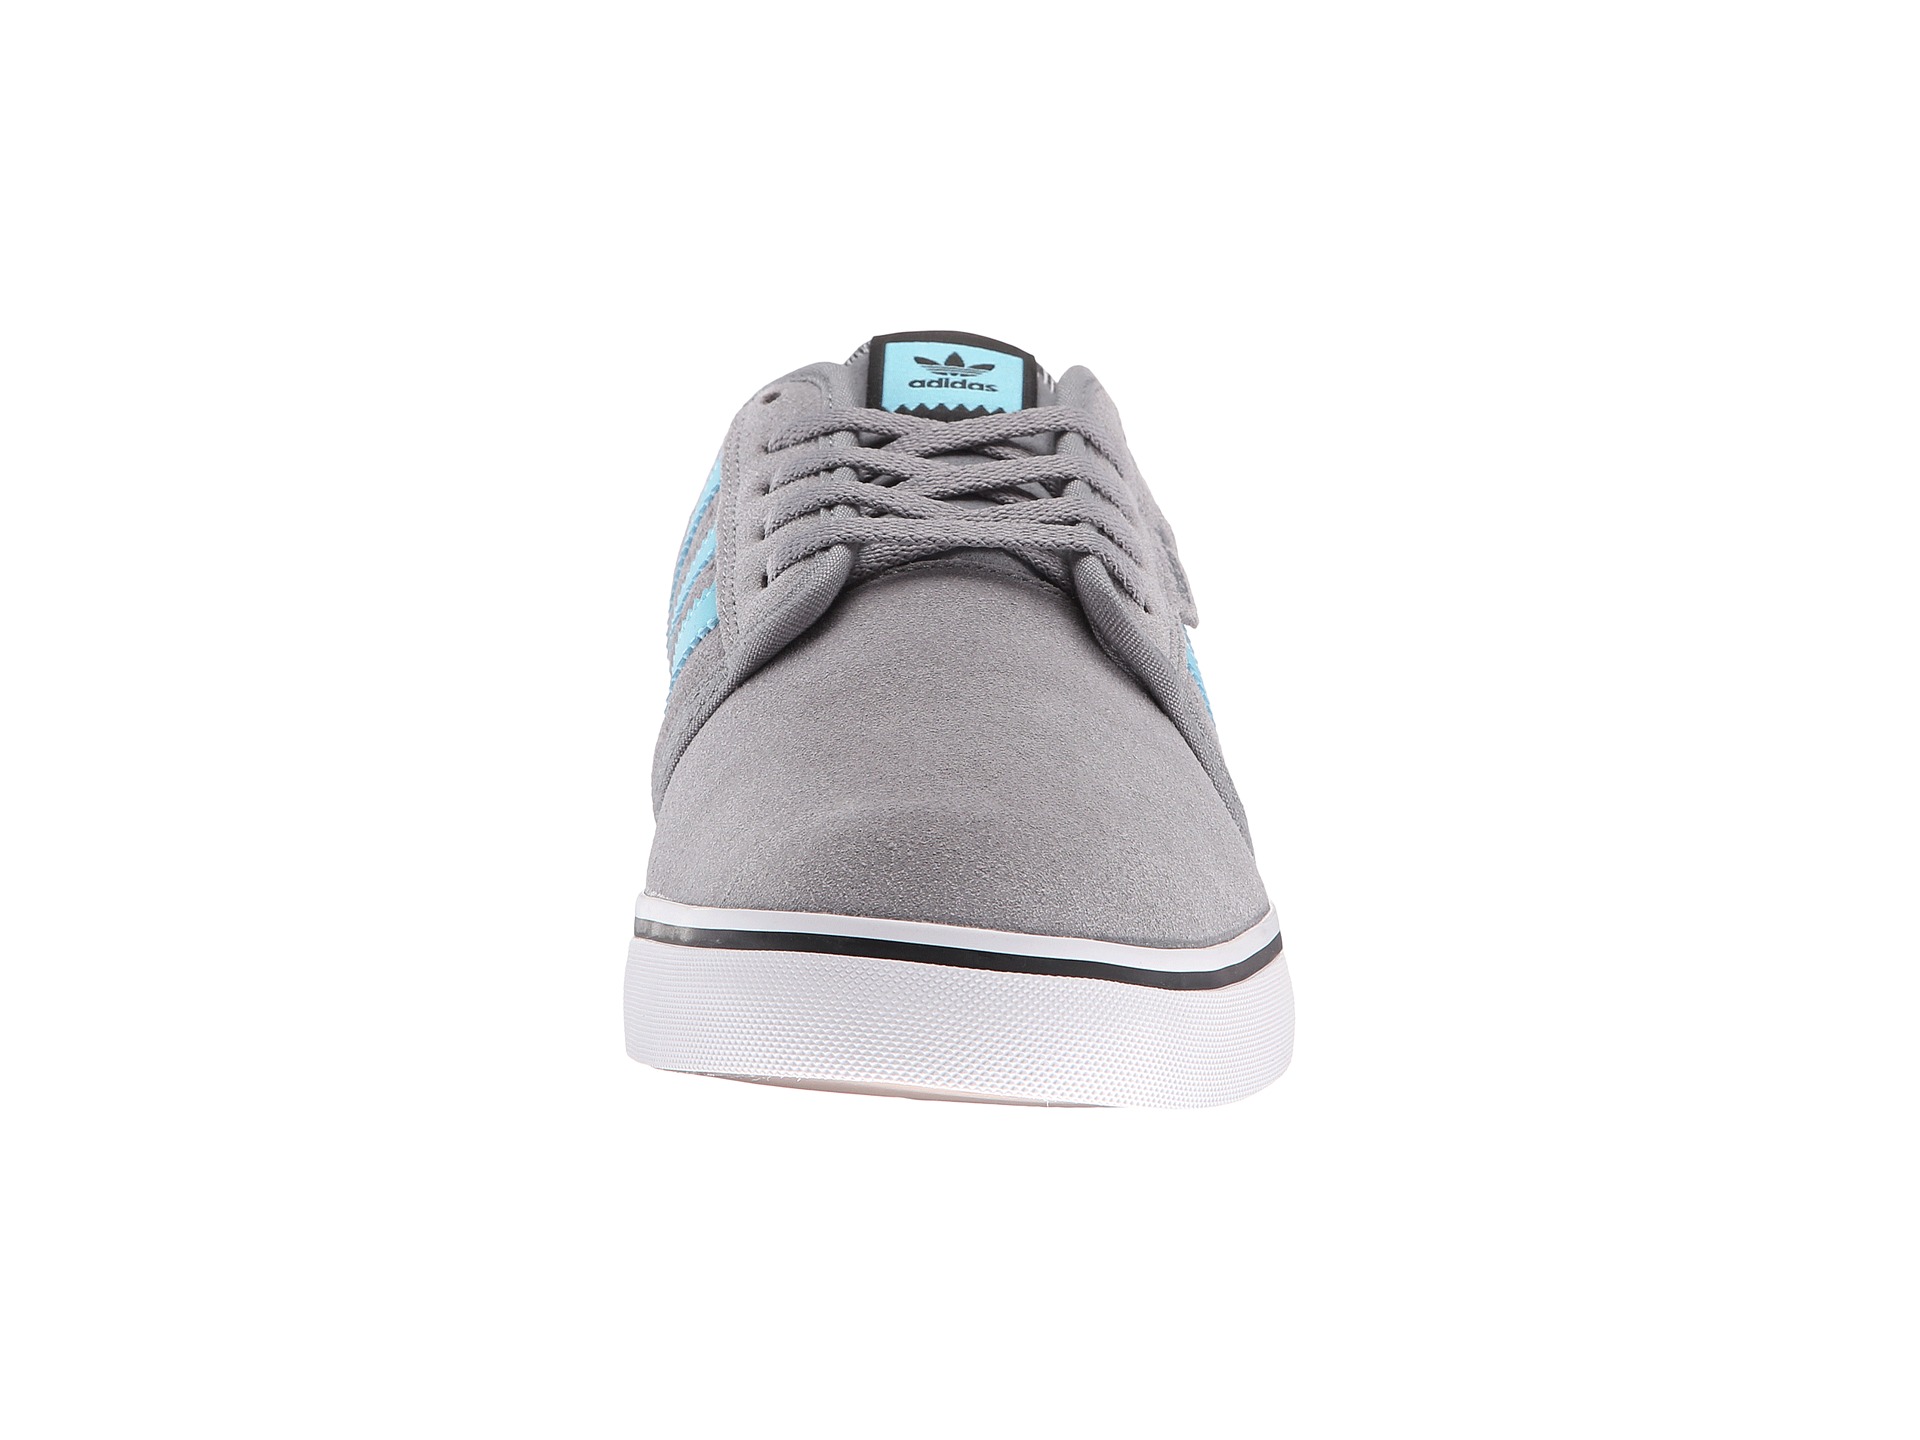 adidas Skateboarding Seeley Grey/Aqua/Black